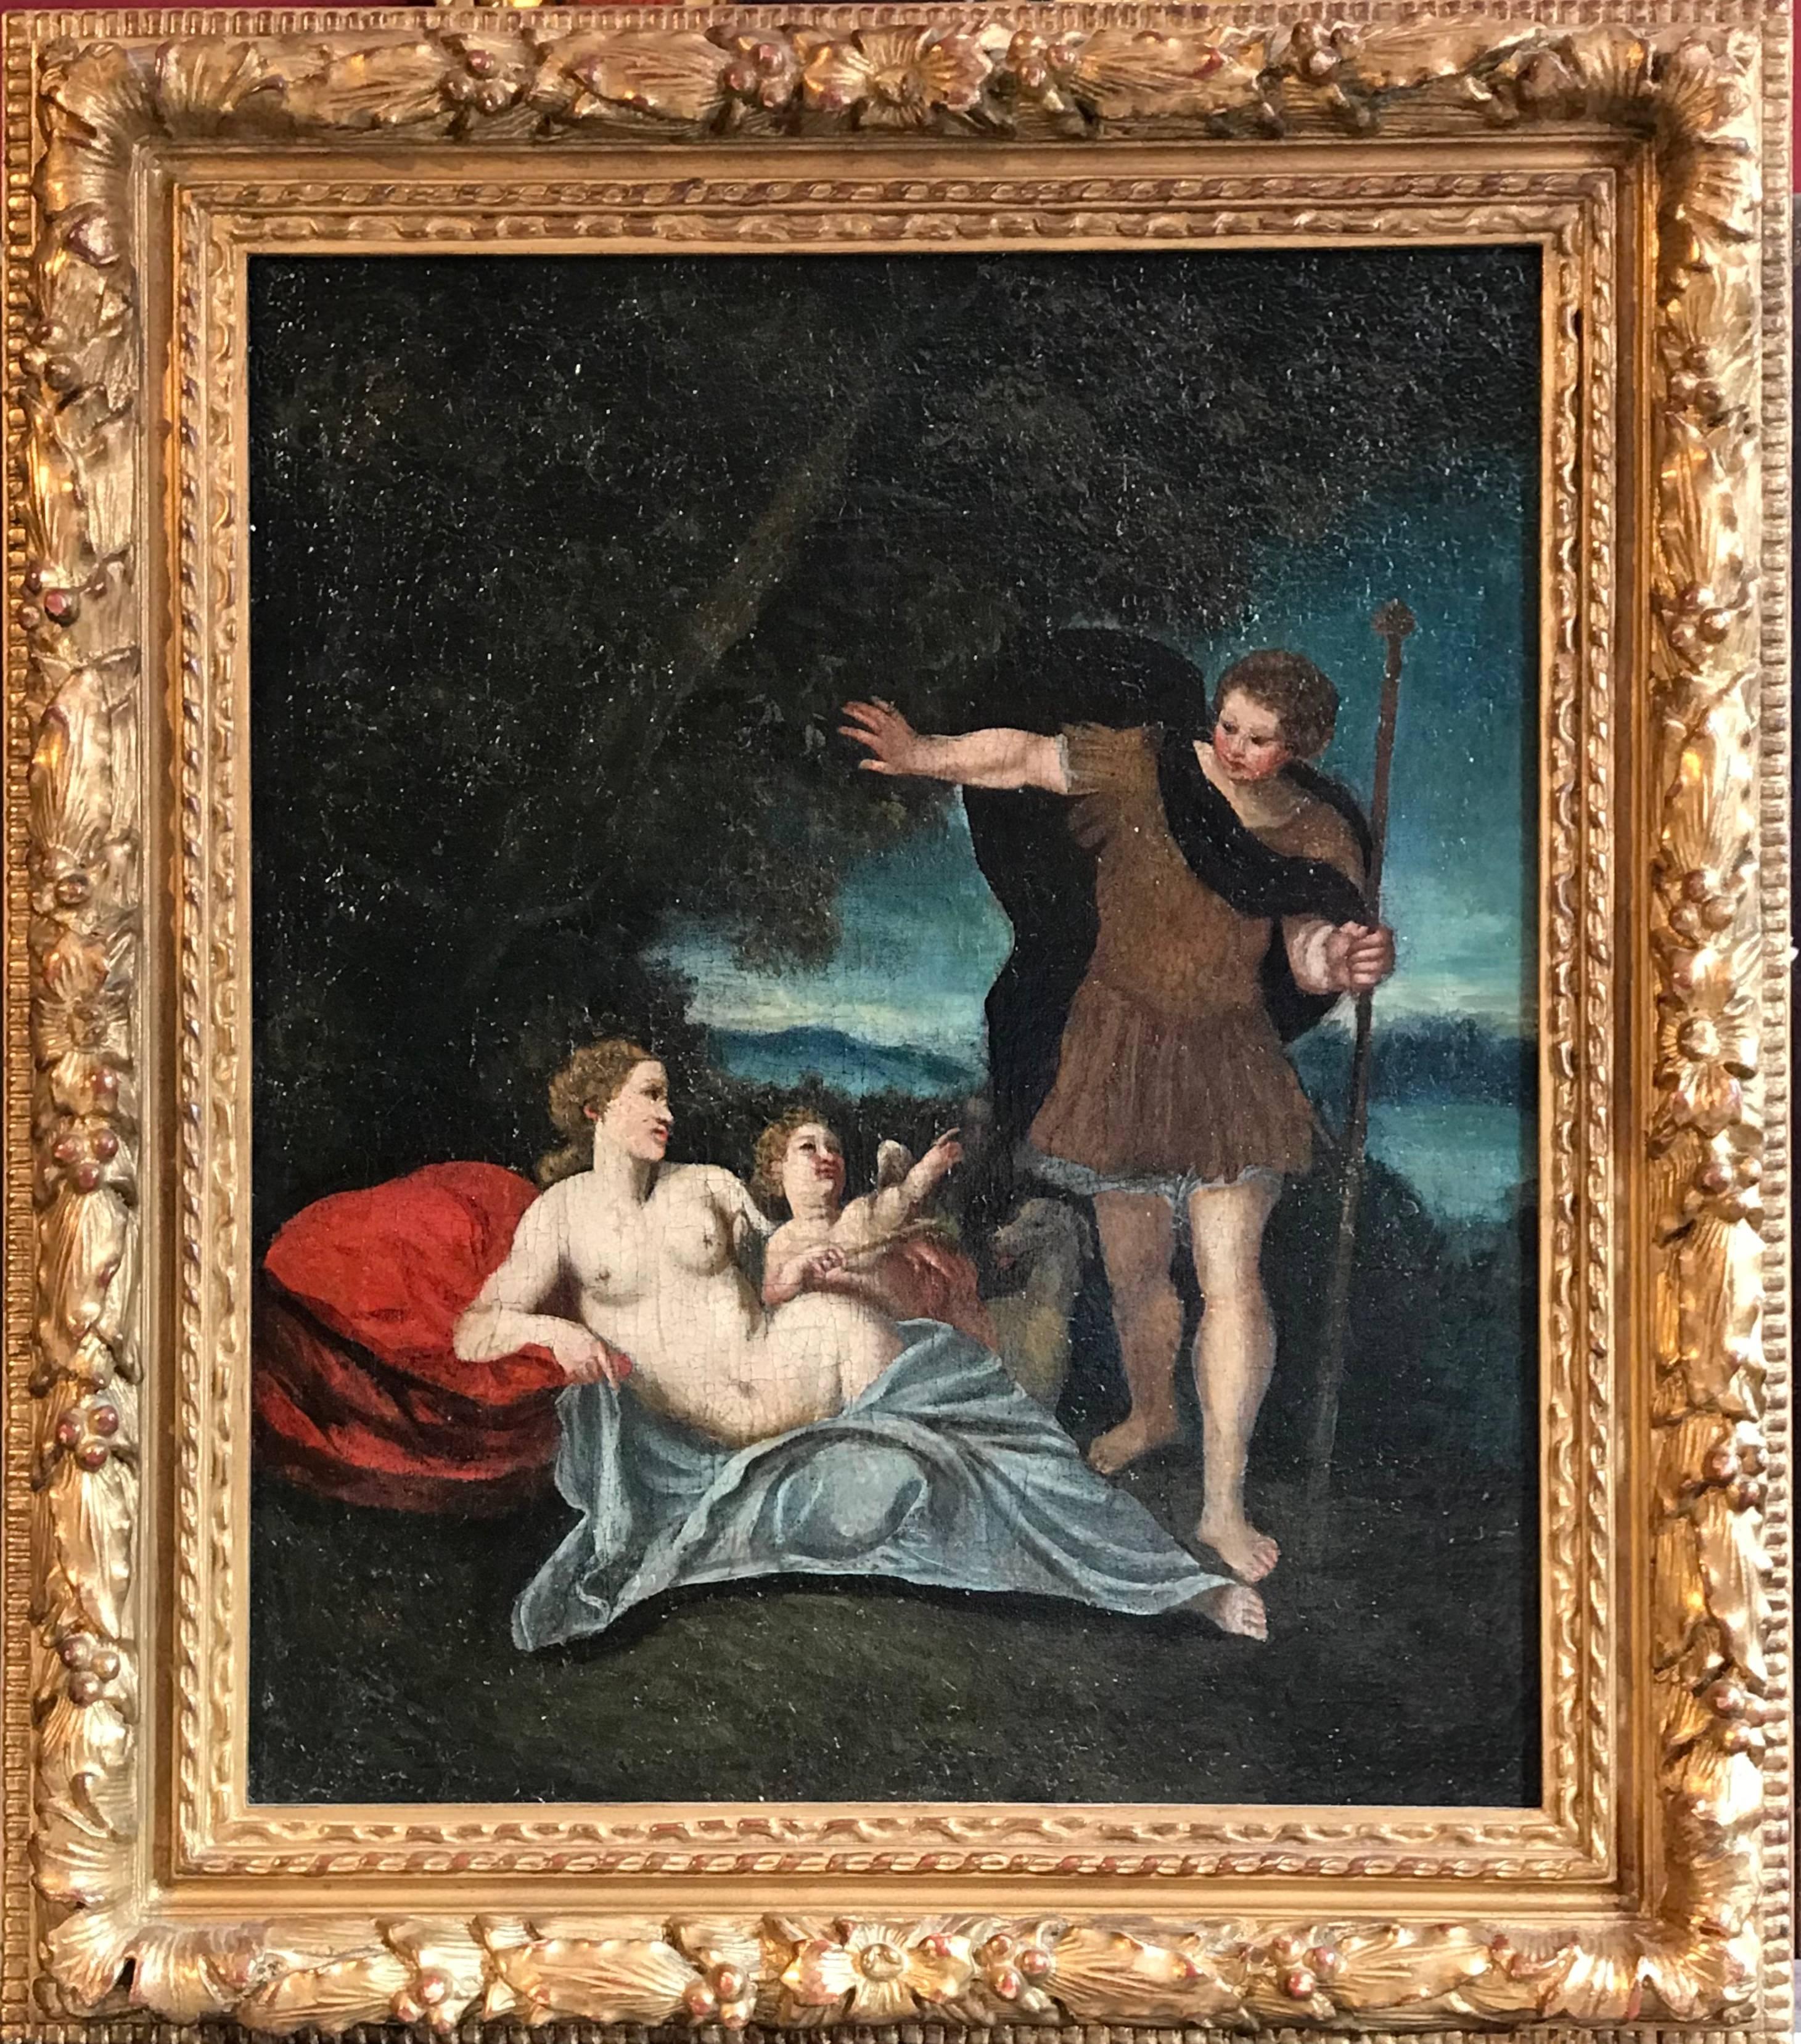 Unknown Figurative Painting - Venus & Mars 17th Century Italian Old Master oil painting on canvas